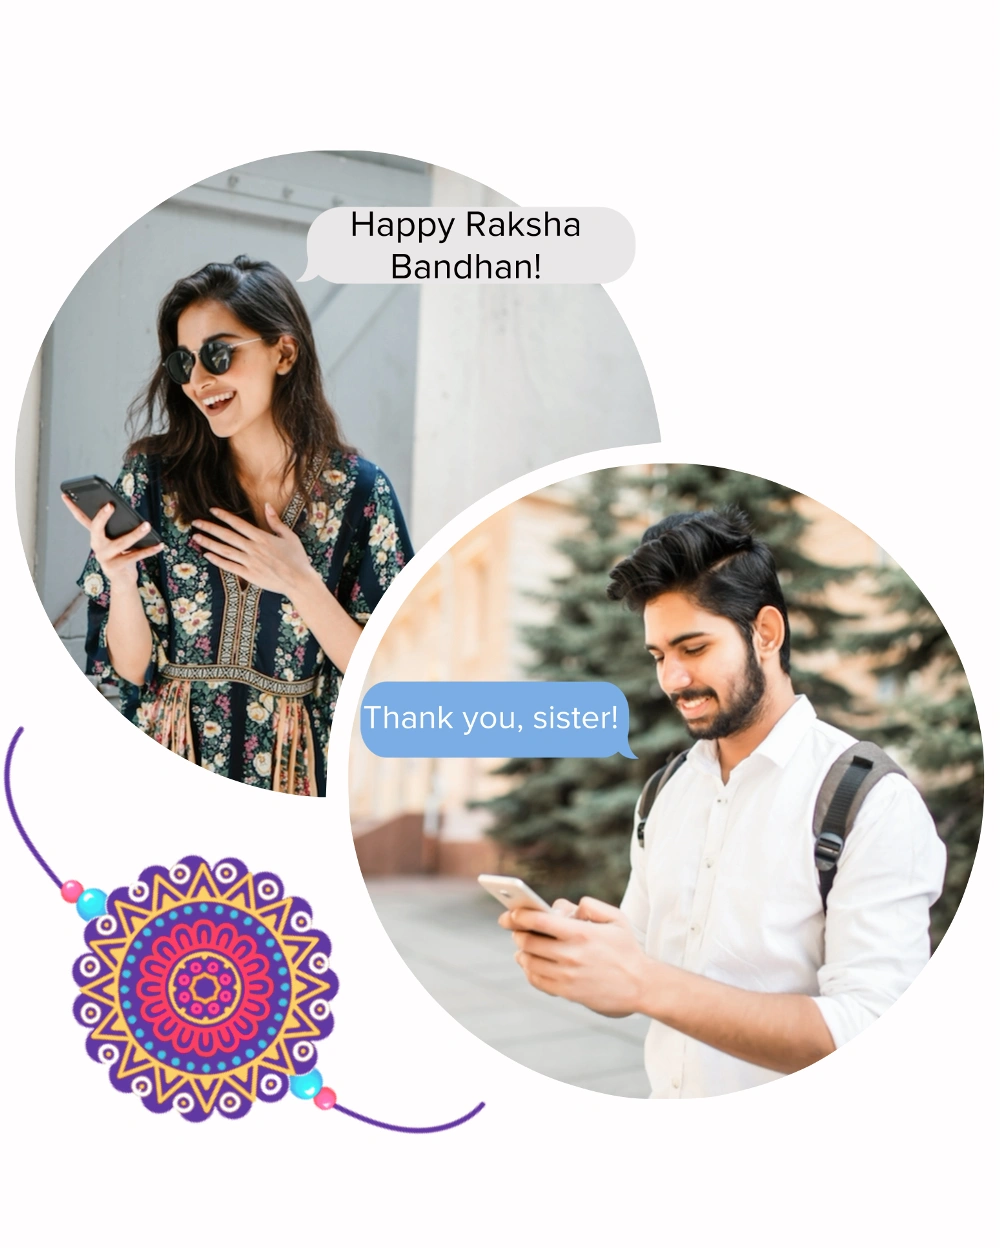 #rakshabandhan #Rakhi #textbubble #phoneaesthetic